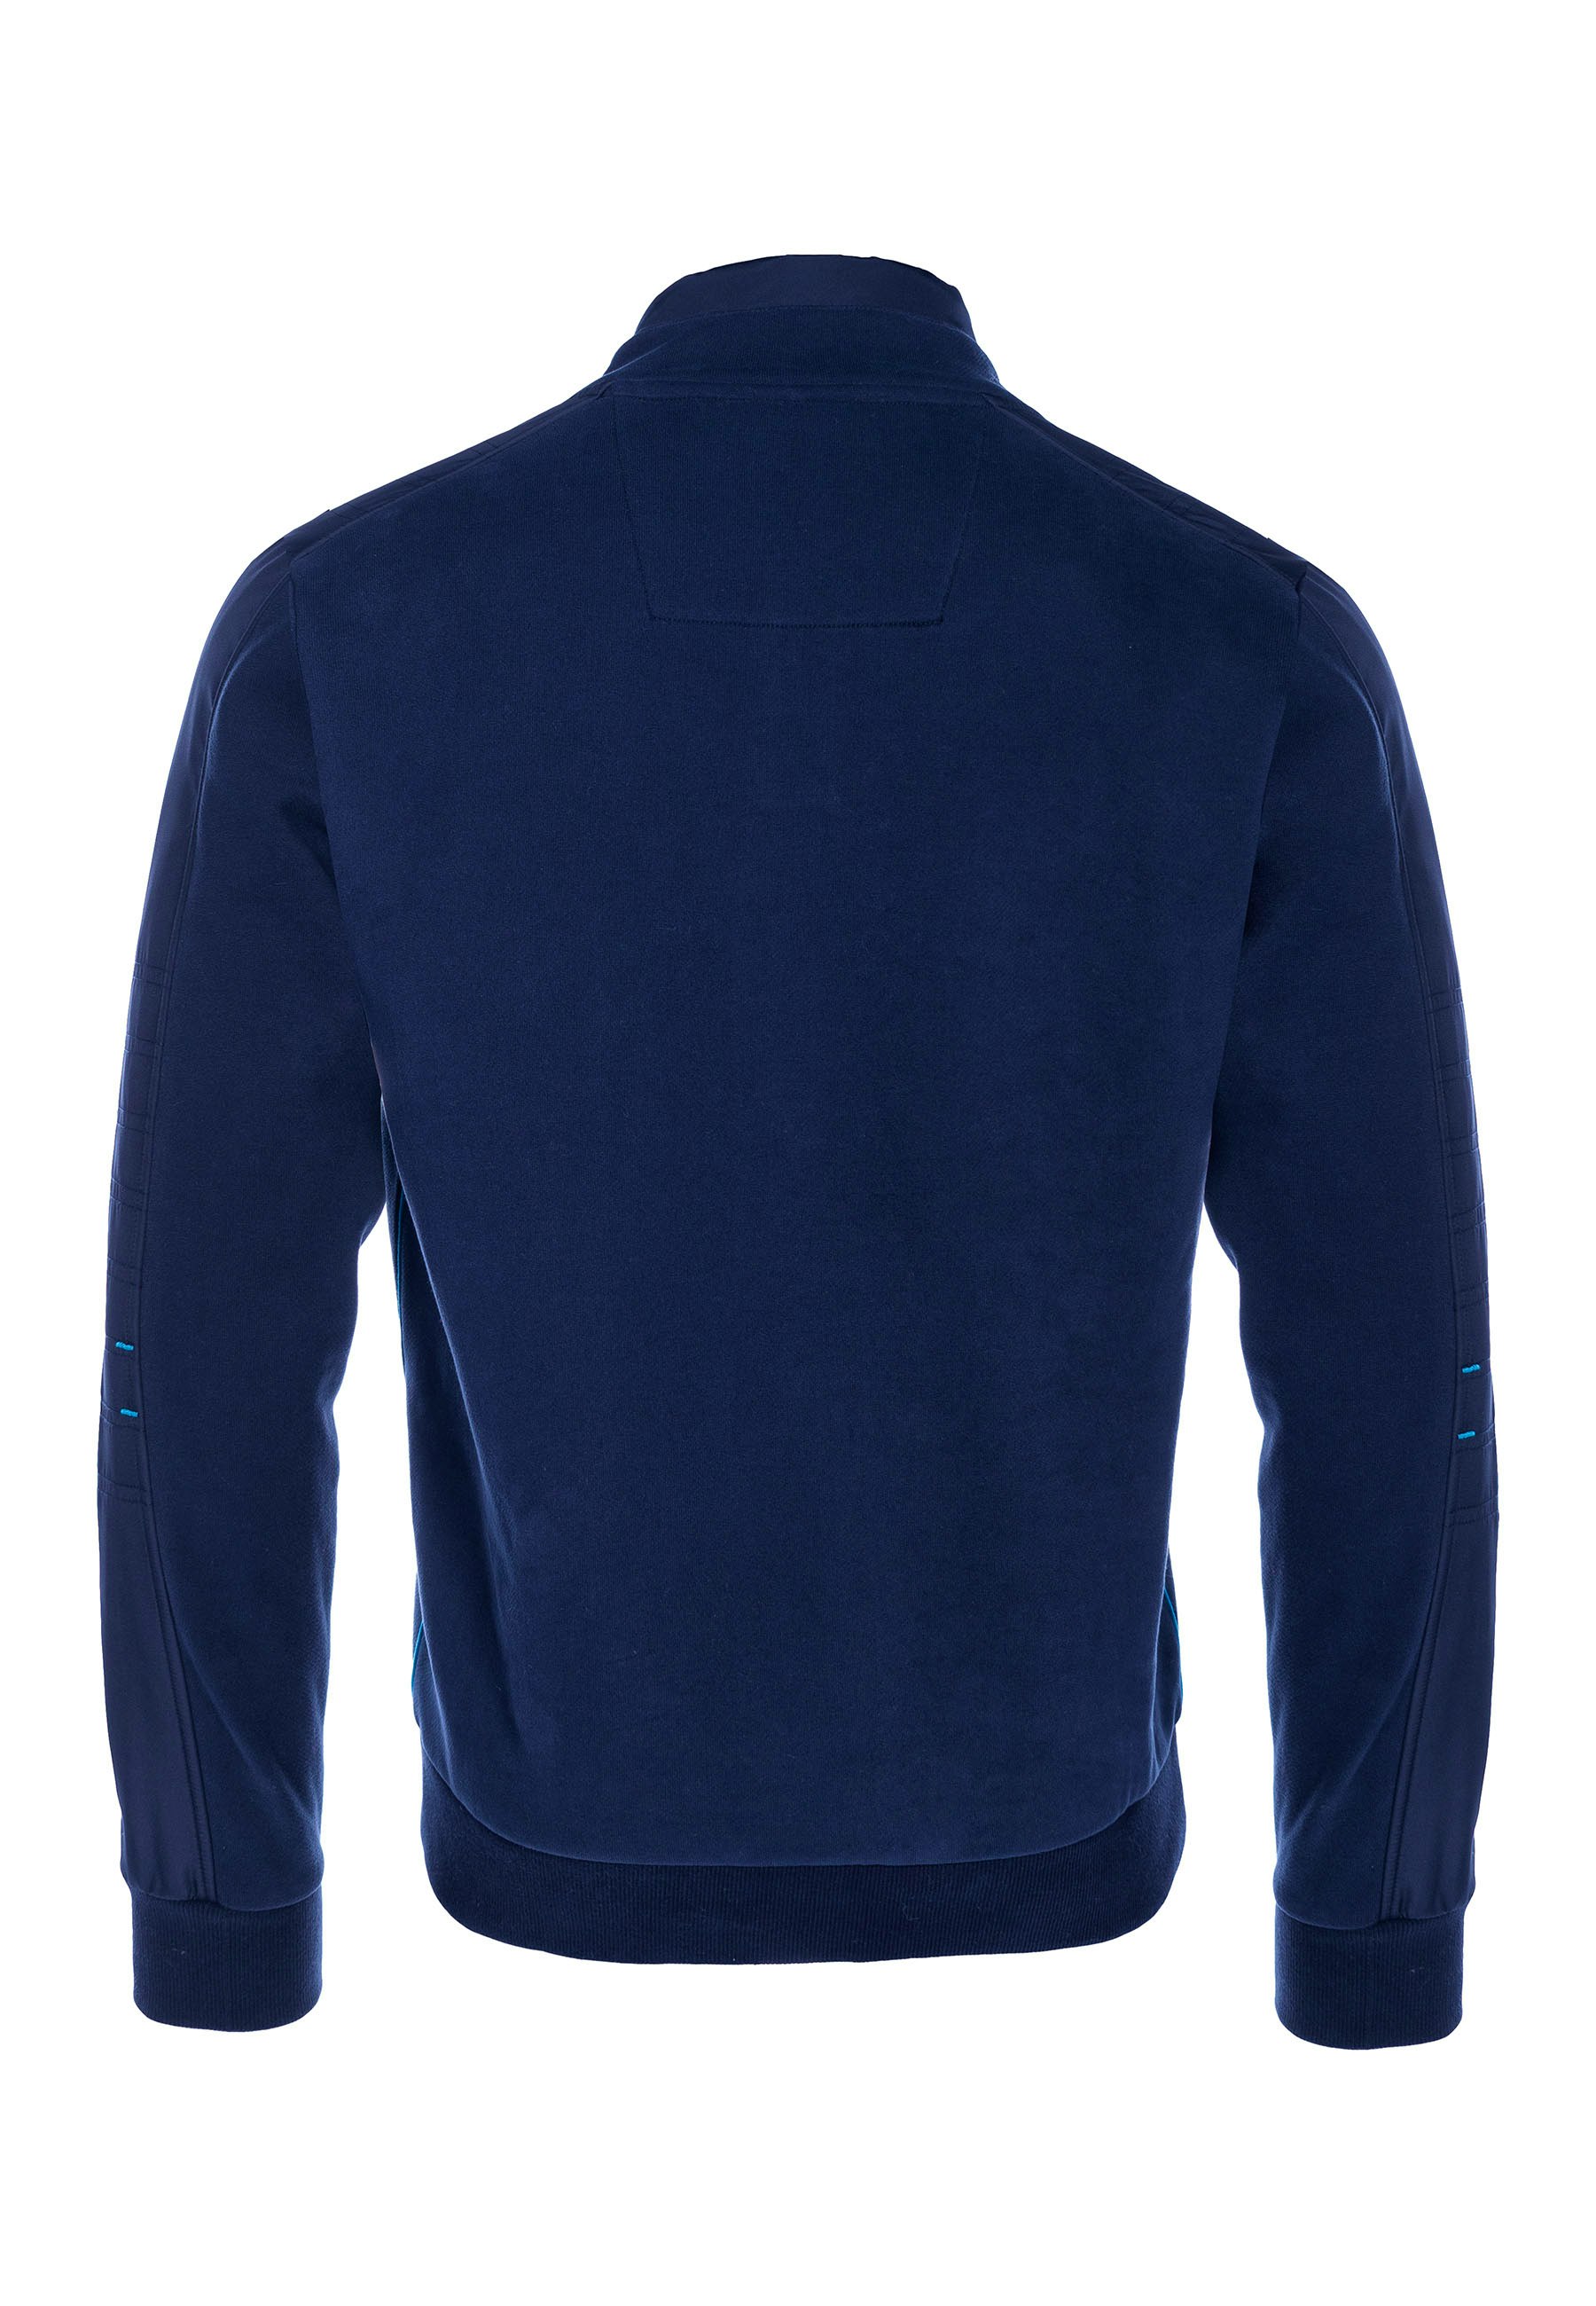 Questo Sweatshirt Elano nautical blue